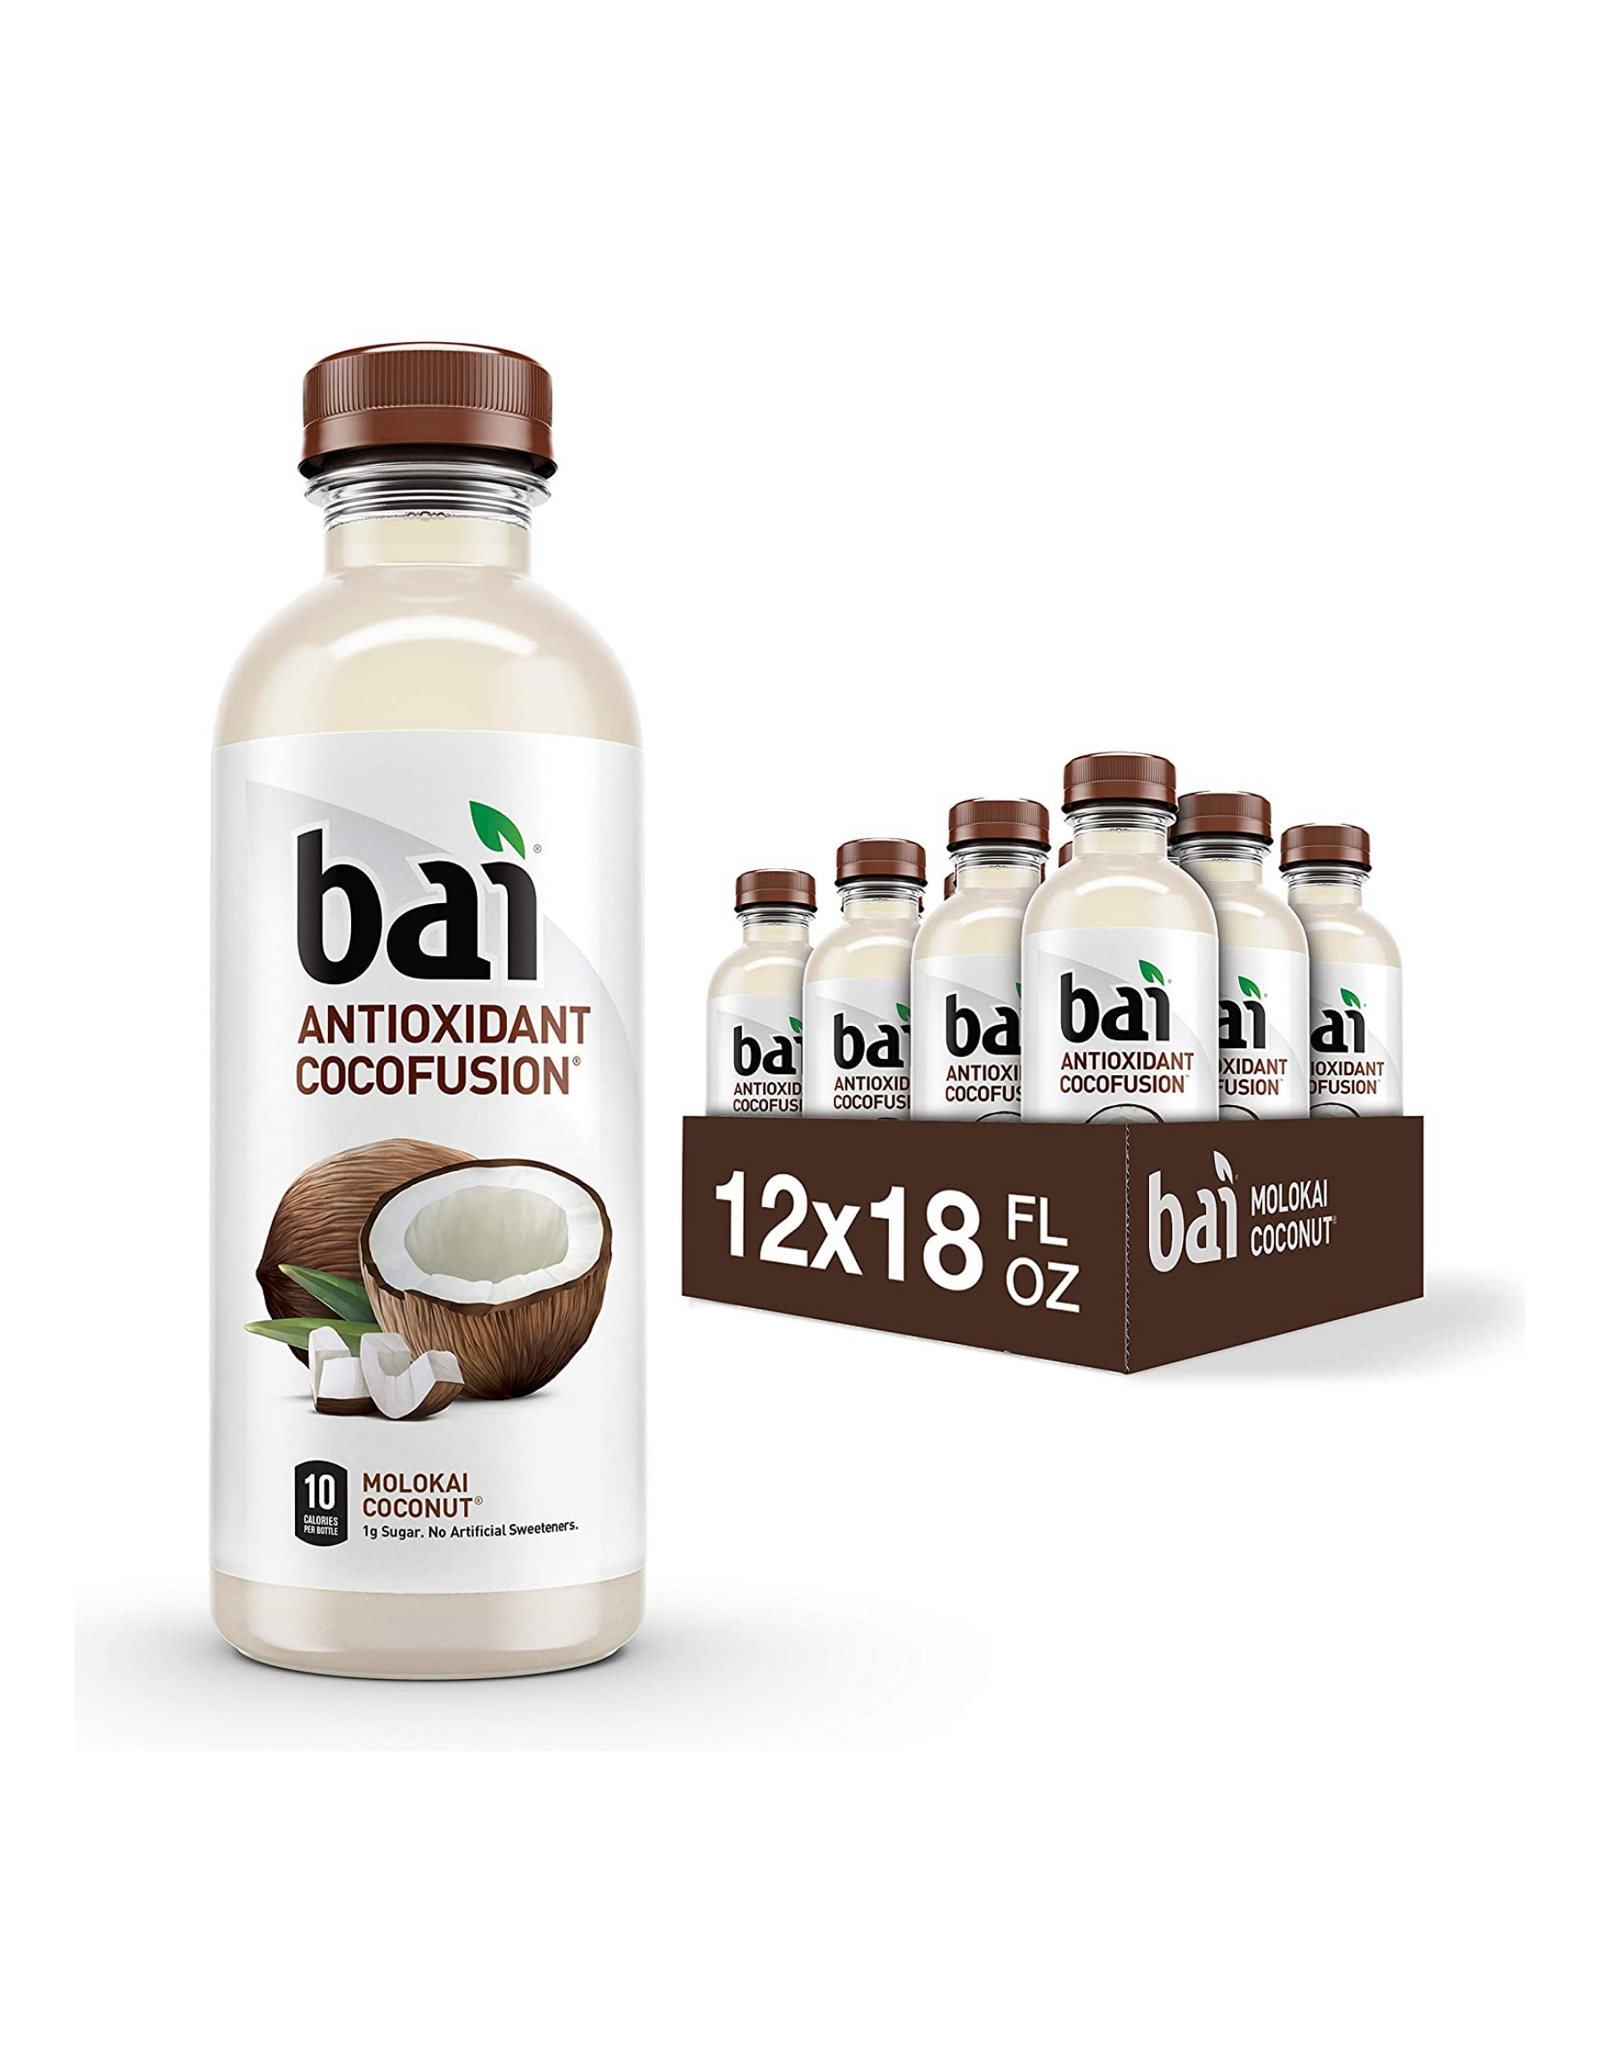 Bai Coconut Flavored Water, Antioxidant Cocofusion, Molokai Coconut, 18 fl oz (Pack of 12)